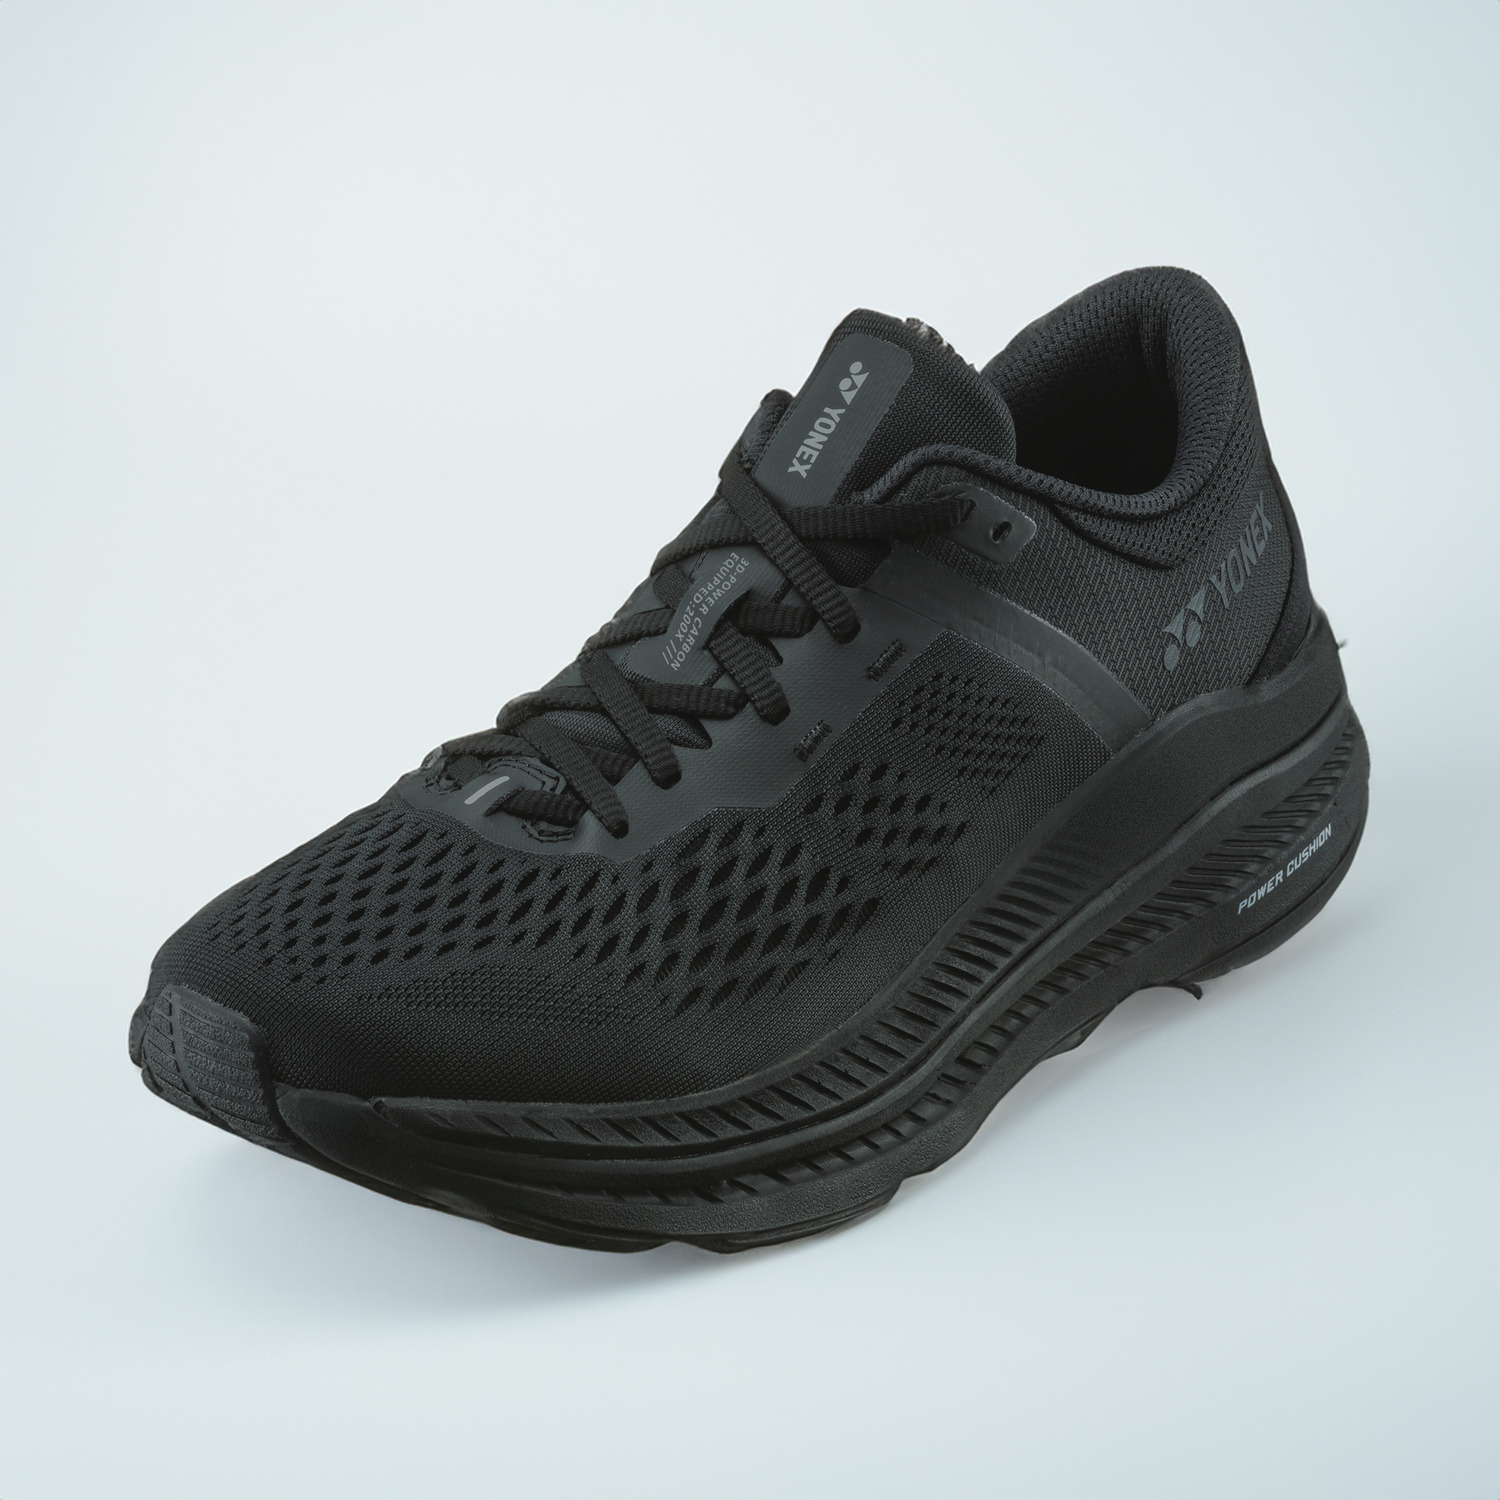 Yonex Saferun 200X (Black) Men's Running Training Shoe - PREORDER